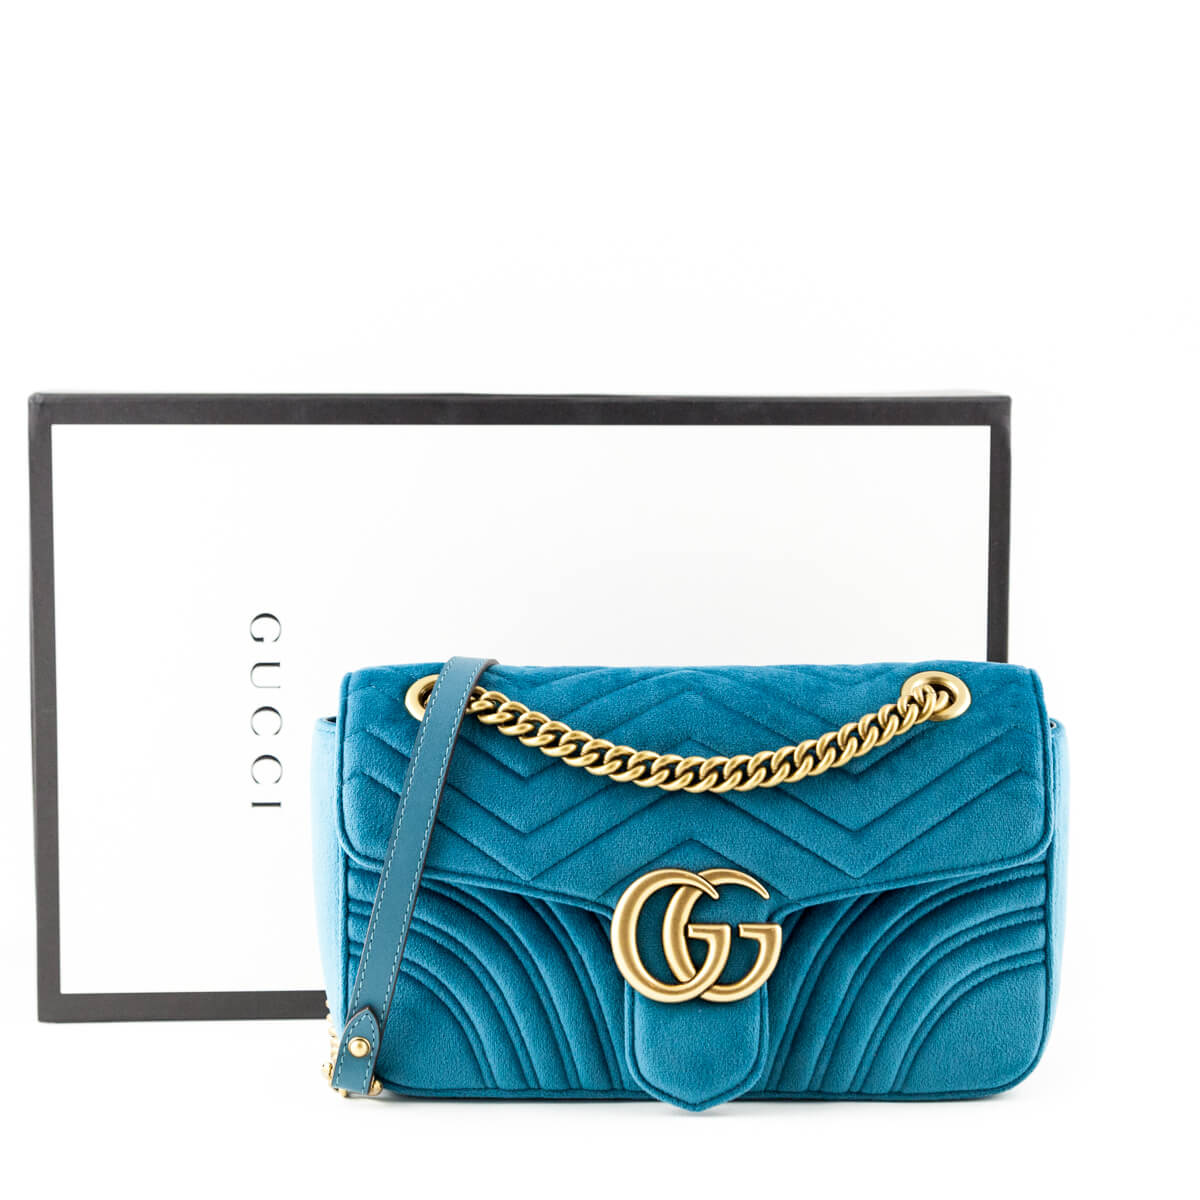 Gucci Petrol Blue Velvet Small GG Marmont Shoulder Bag - Gucci Bags